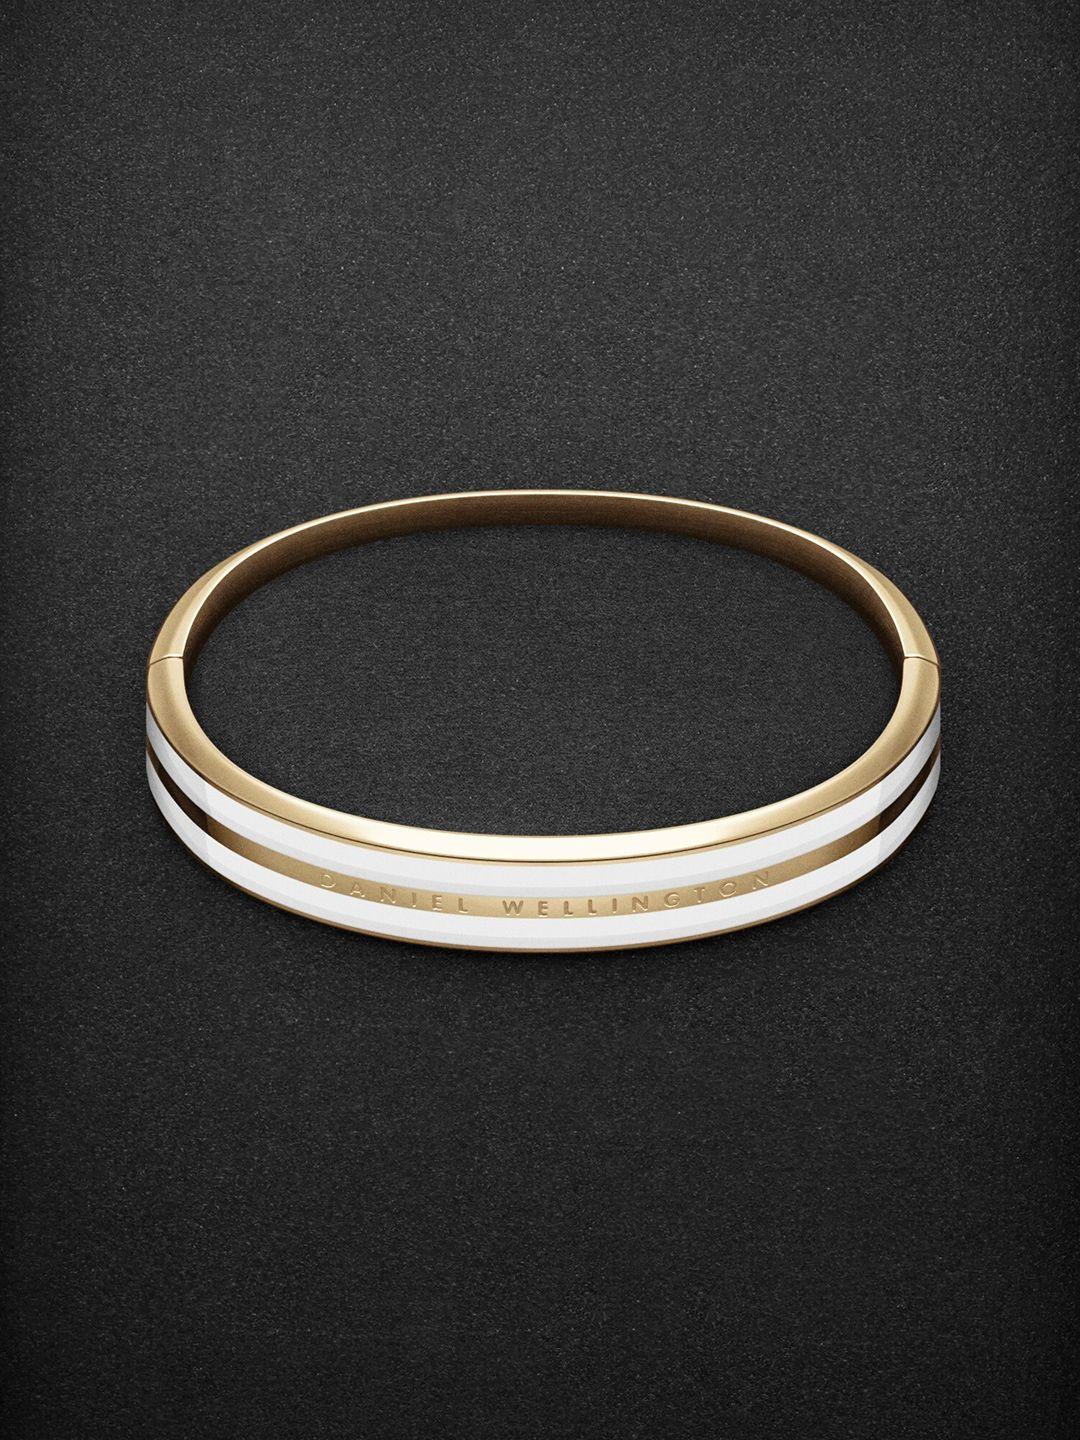 daniel wellington gold-plated cuff bracelet